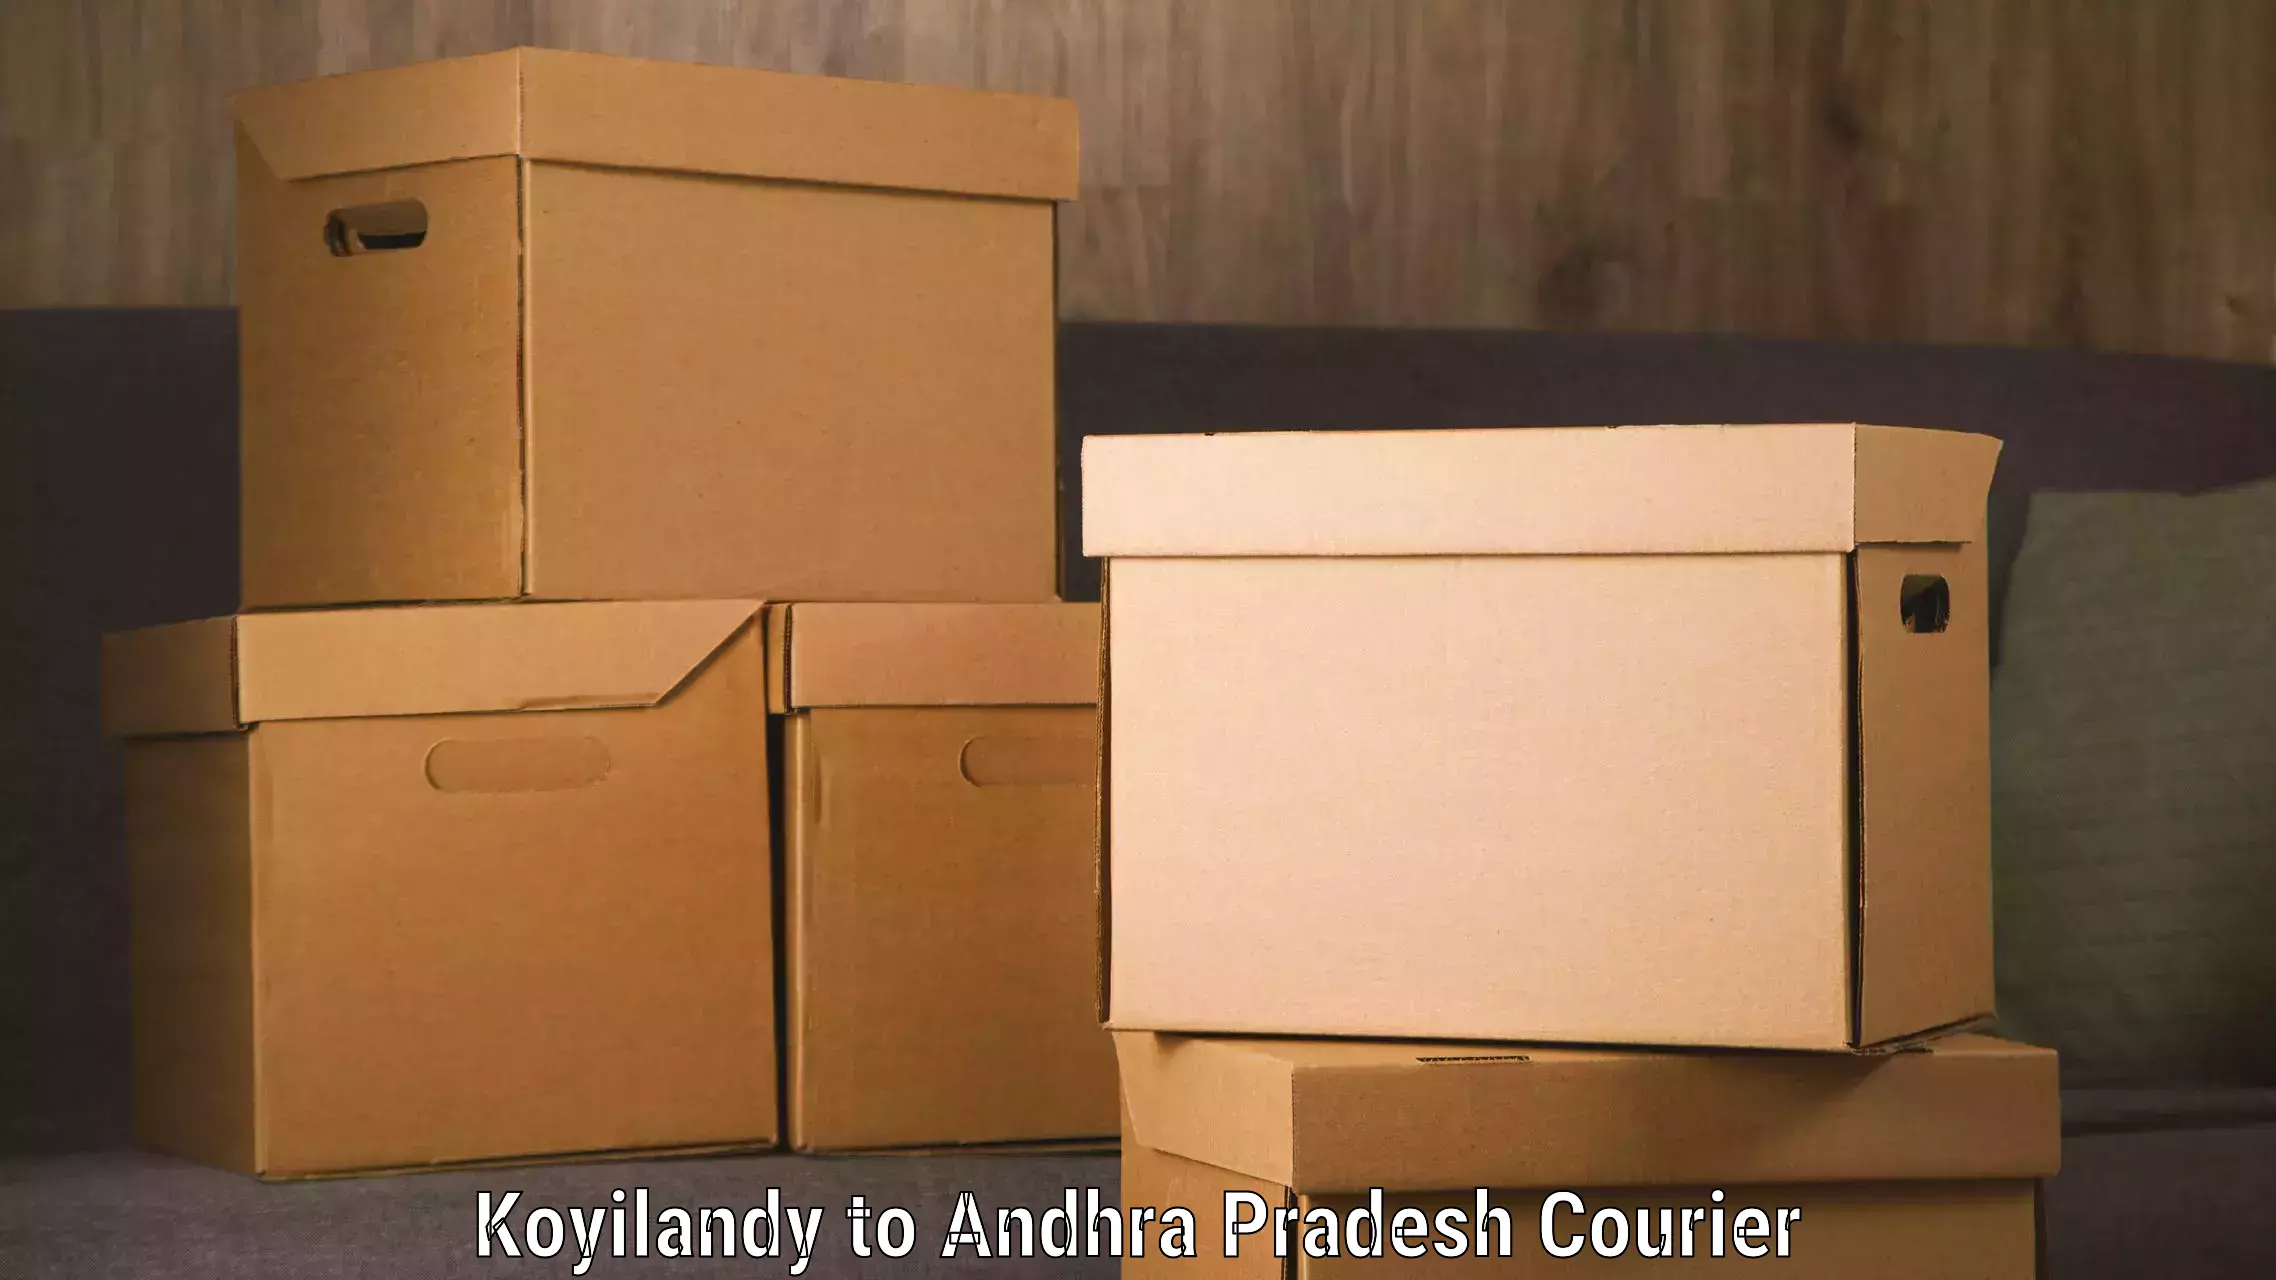 Courier service innovation Koyilandy to Vizianagaram